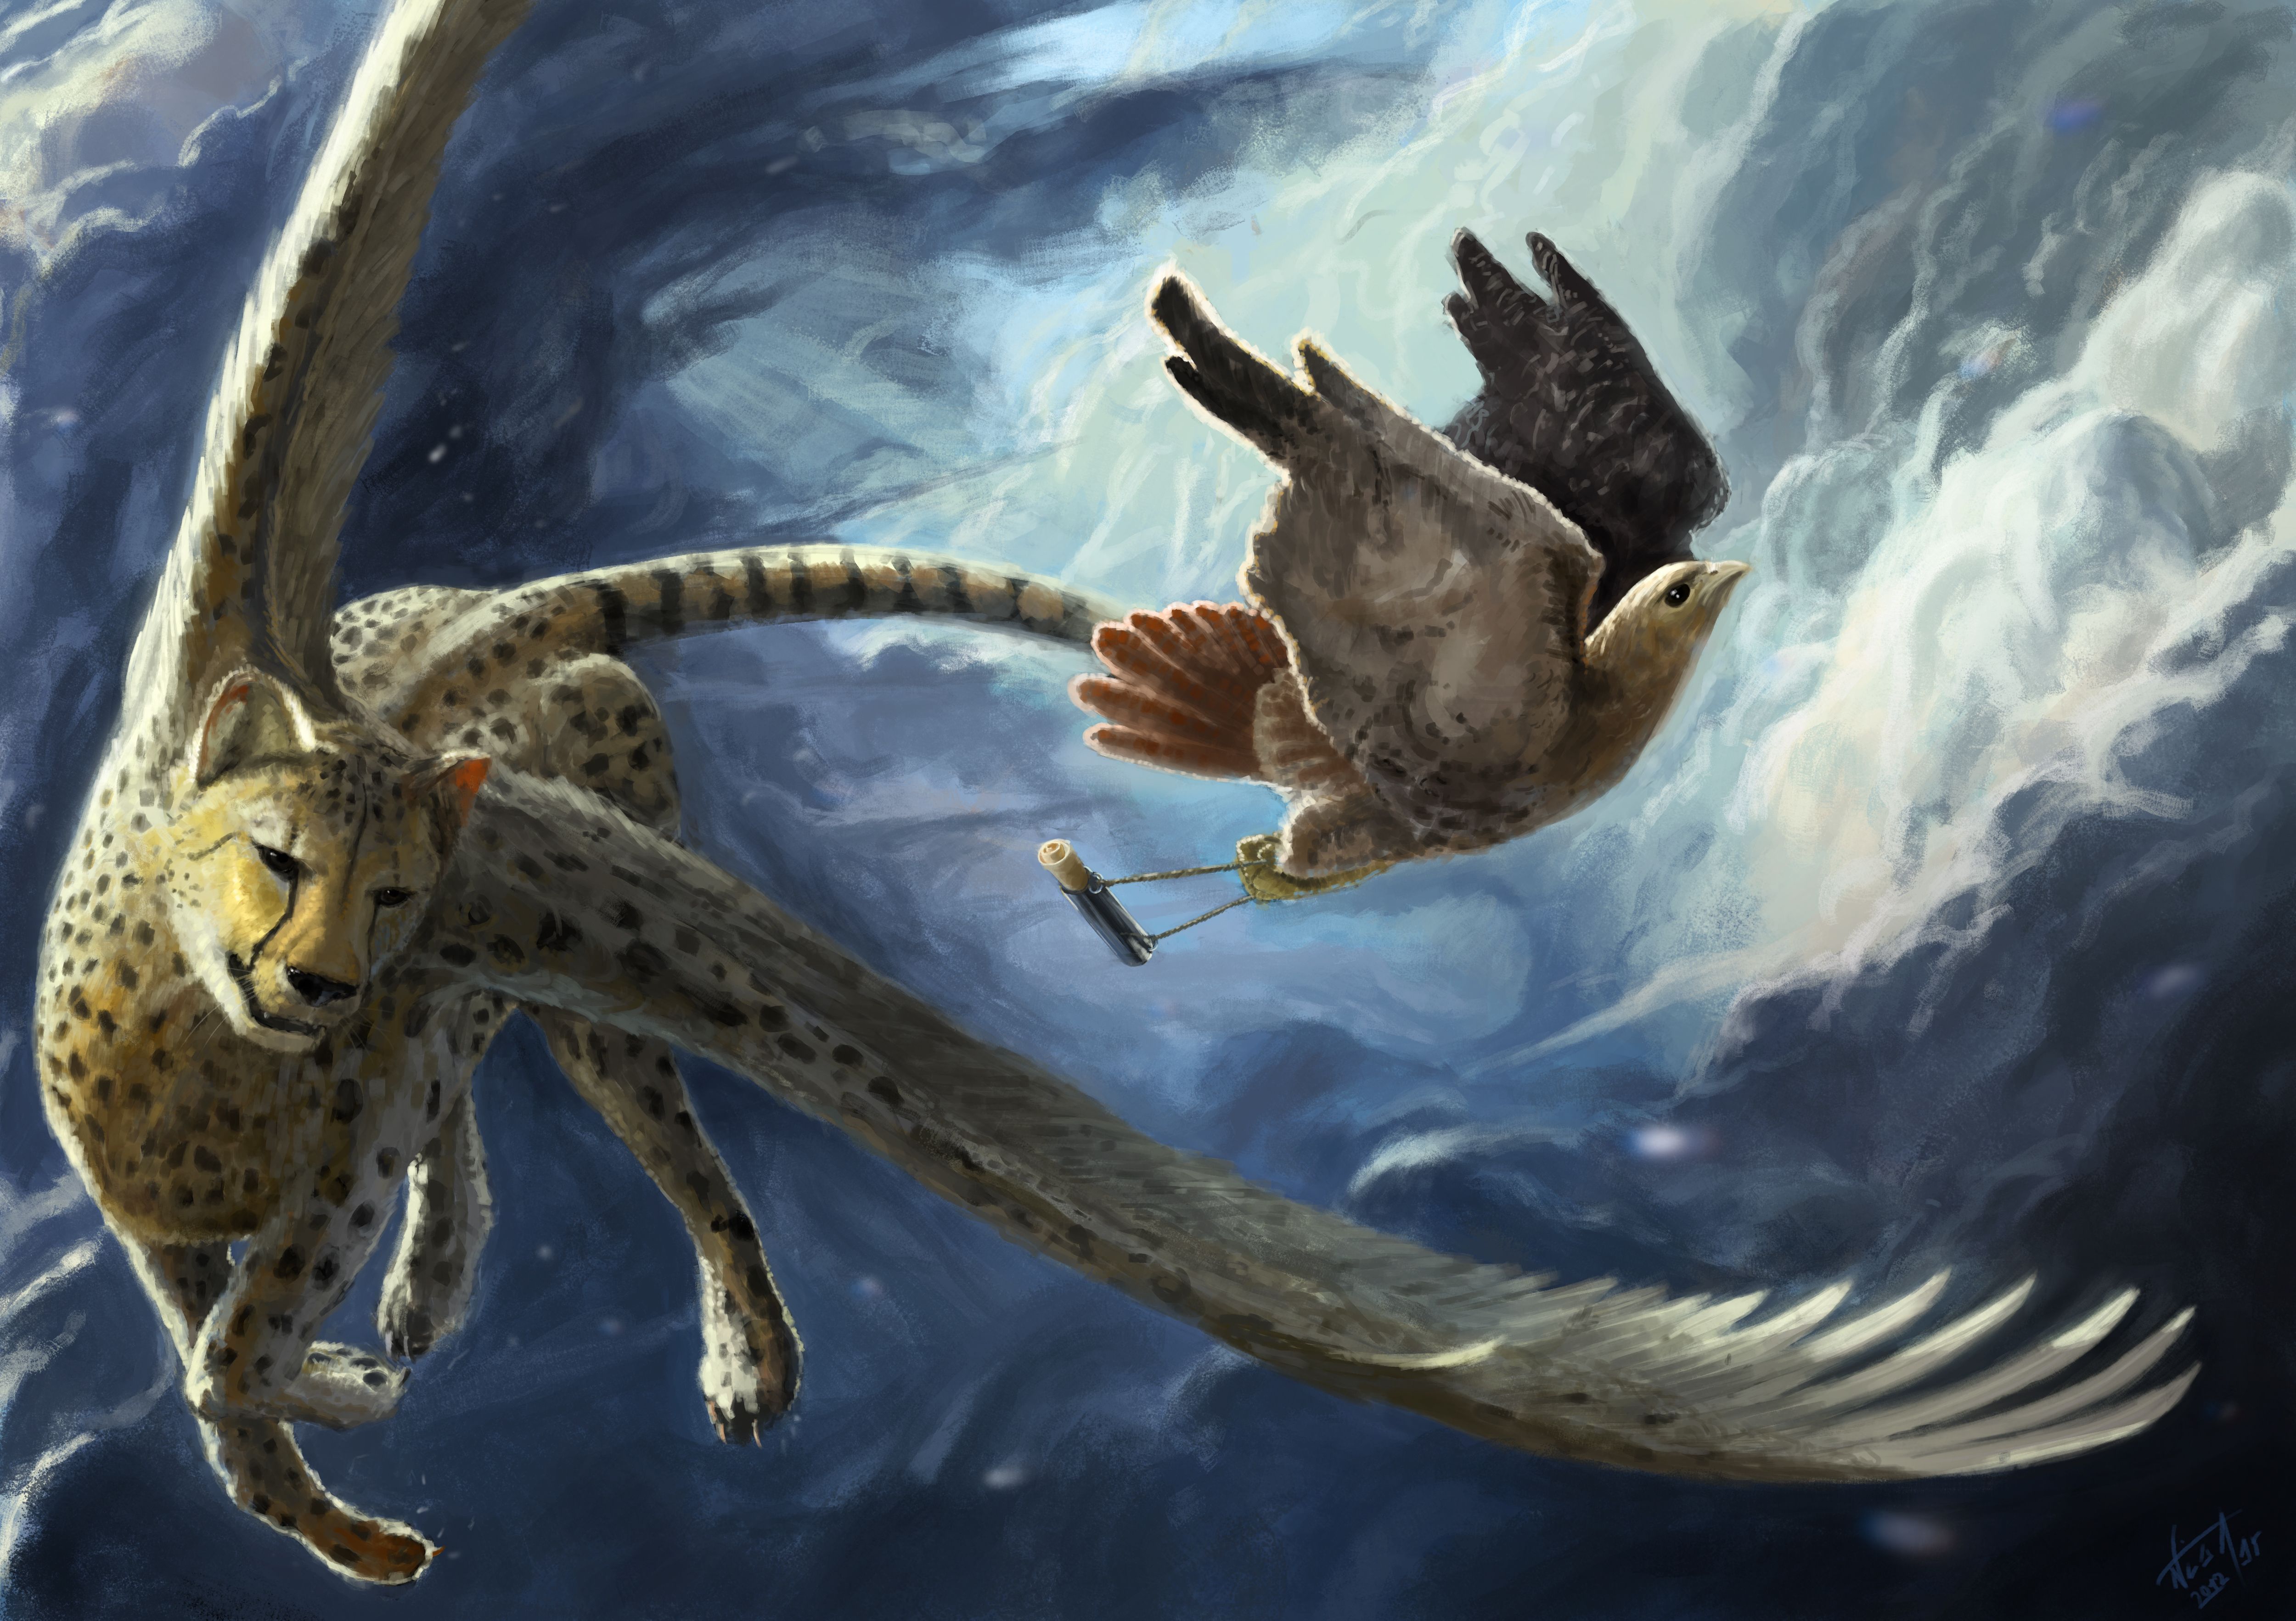 Wallpaper Magical animals Fantasy Image Download